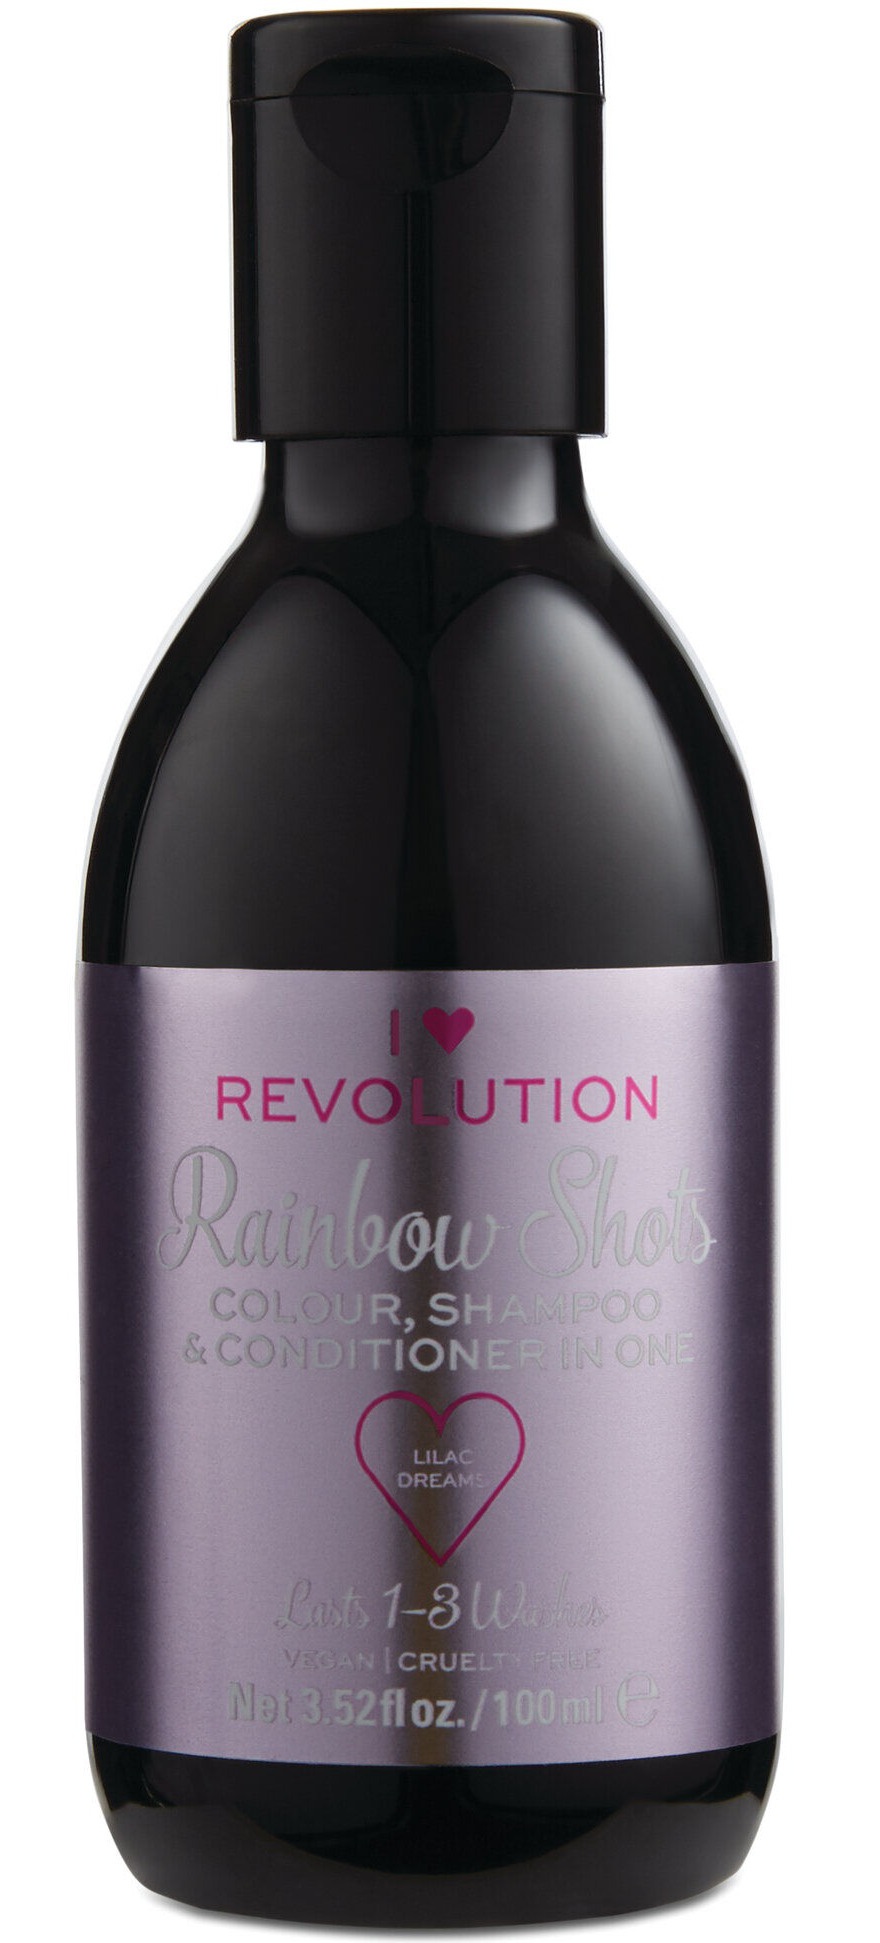 Revolution I Heart Revolution Rainbow Shots Lilac Dreams